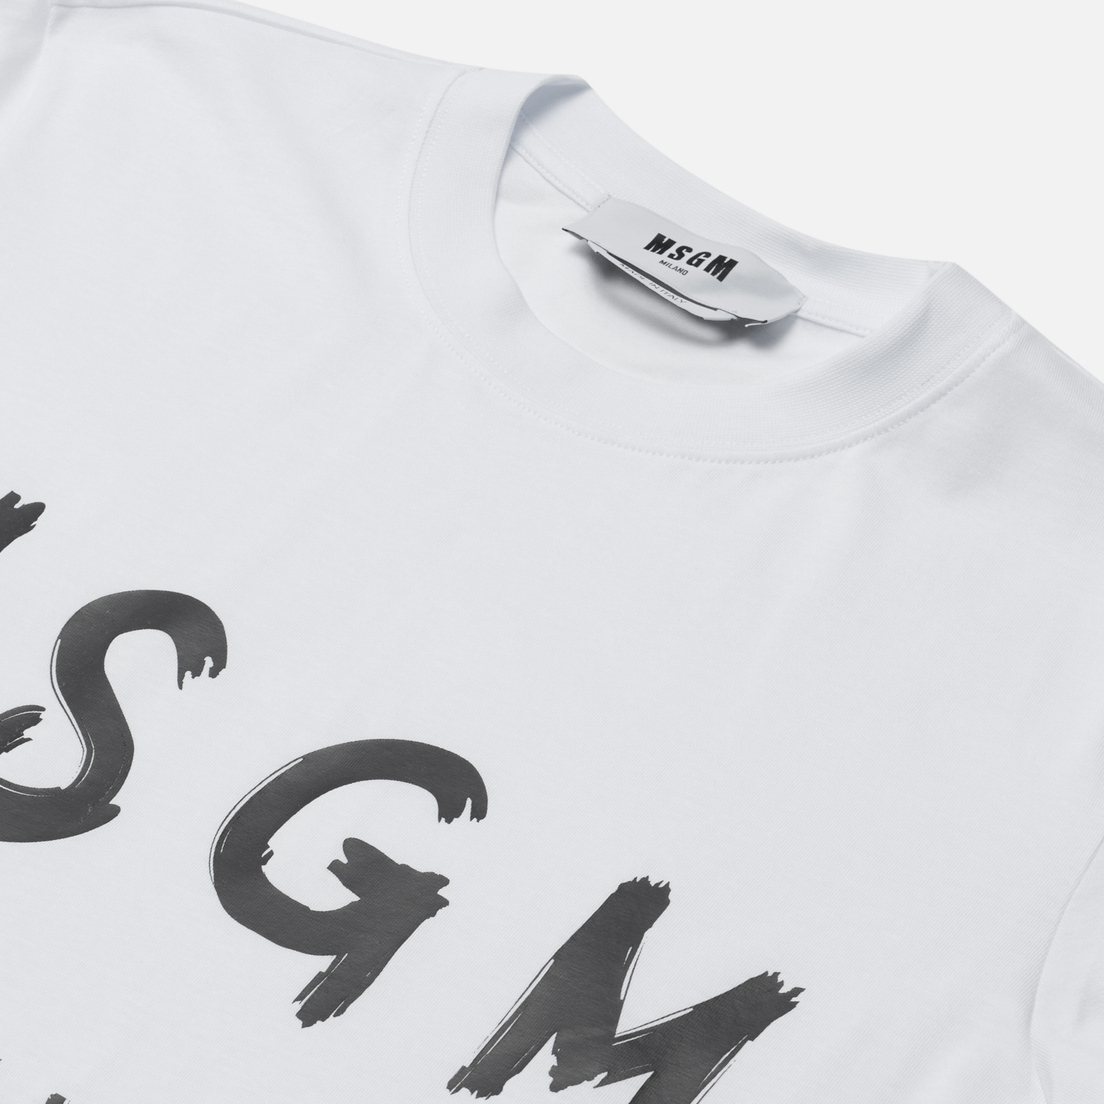 MSGM Женская футболка MSGM Milano Logo